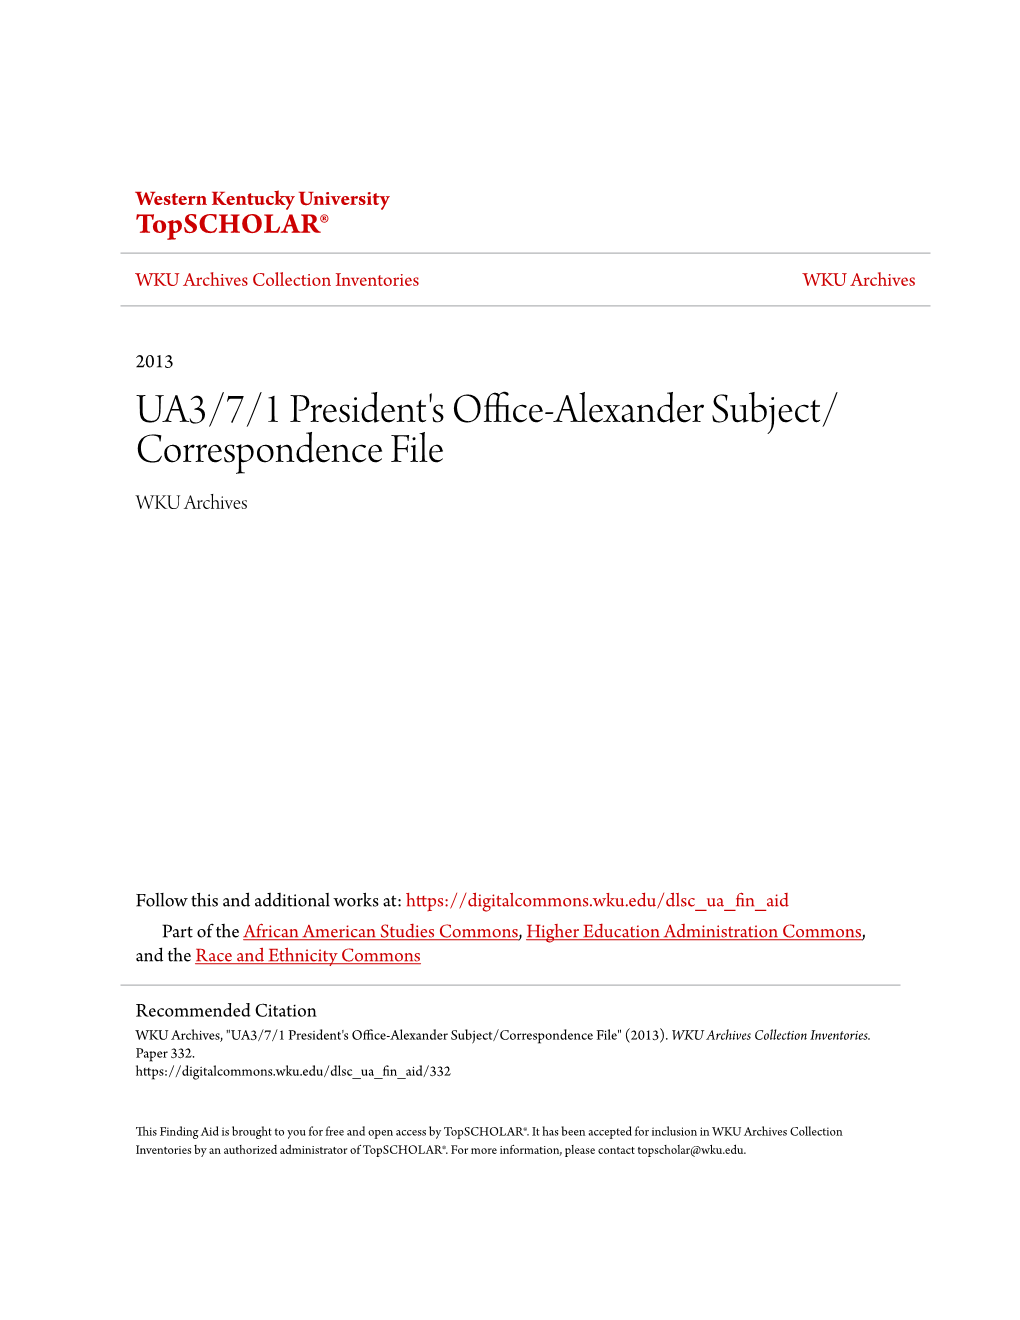 UA3/7/1 President's Office-Alexander Subject/Correspondence File" (2013)